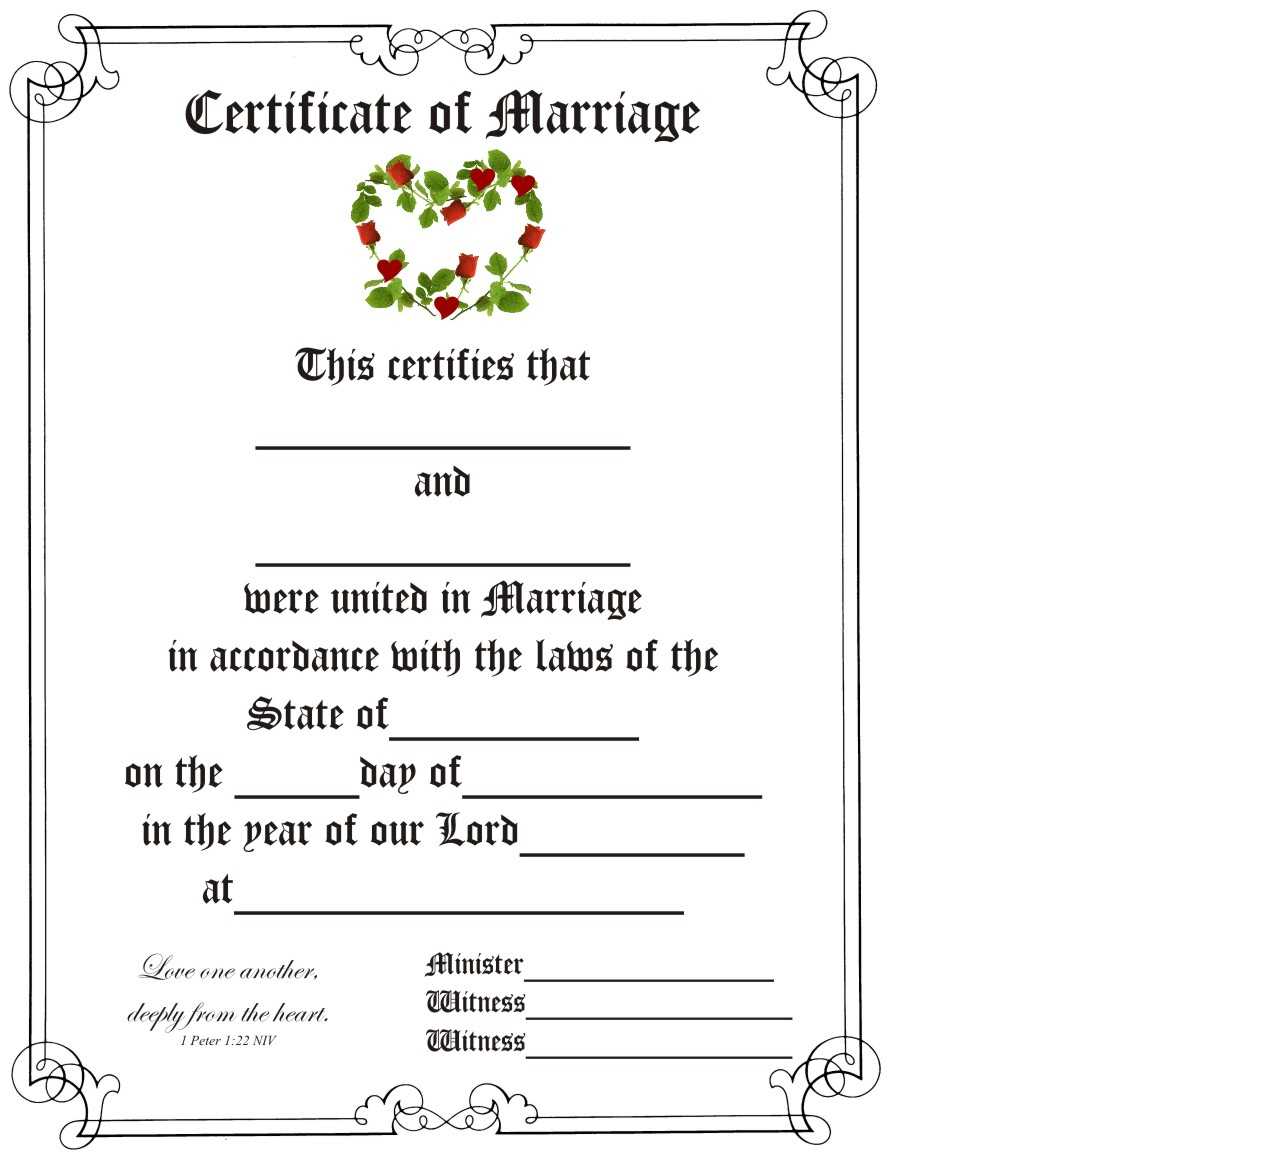 Marriage Certificate Template Designs  Inside Certificate Of Marriage Template